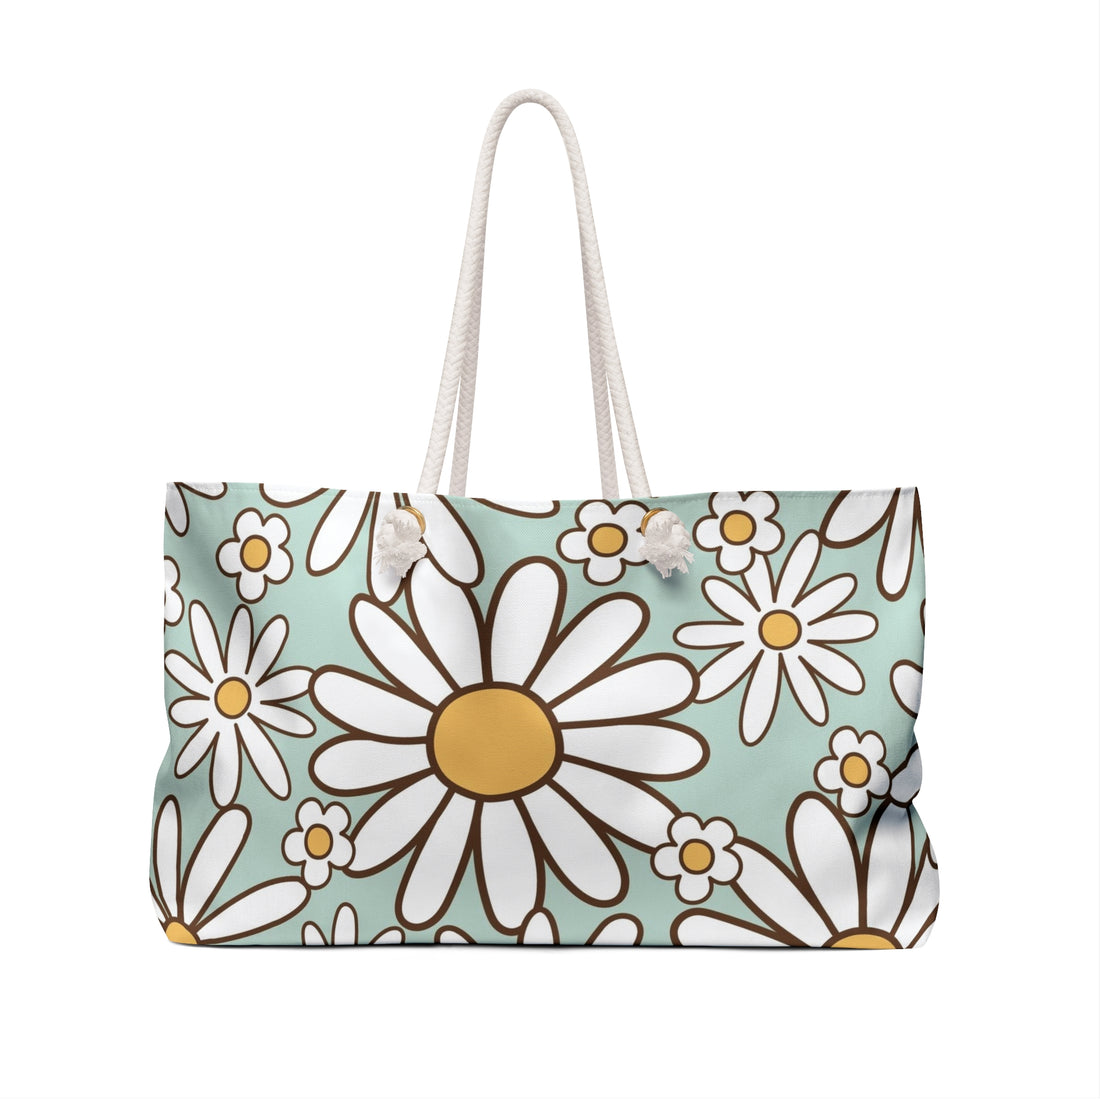 Daisy Inspired Weekender Bag